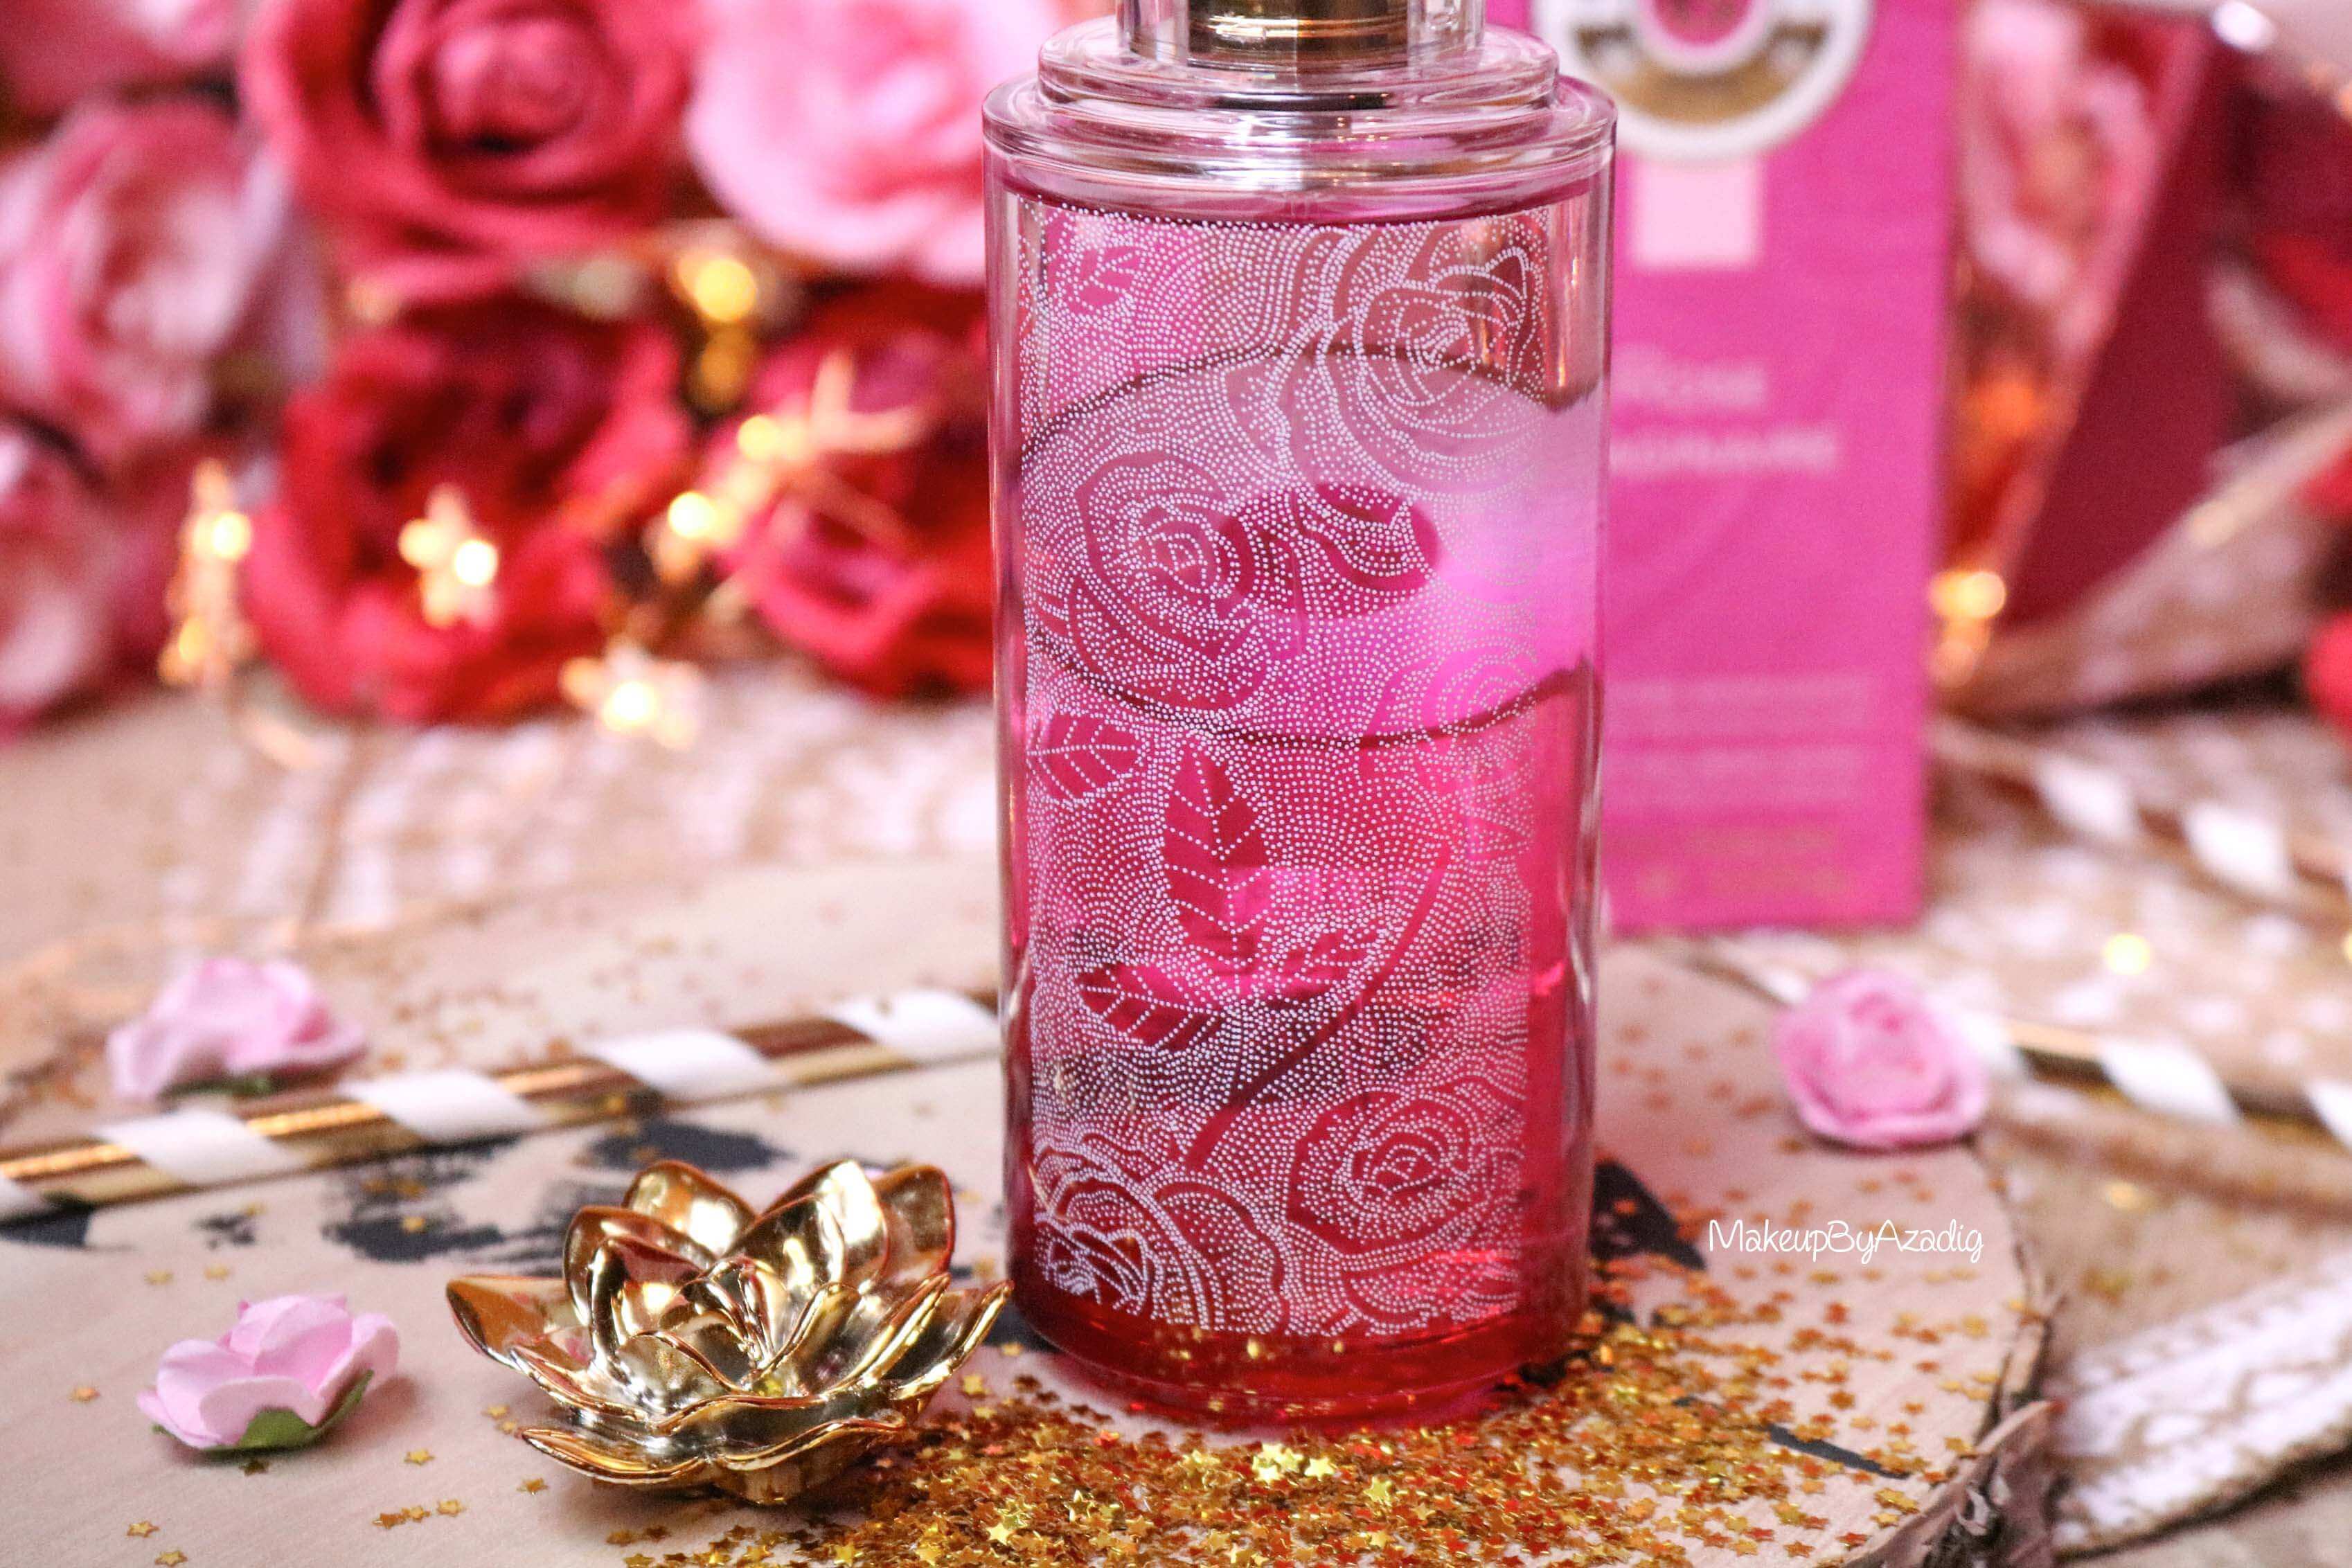 revue-eau-parfumee-bienfaisante-rose-imaginaire-roger-gallet-makeupbyazadig-parfum-bonne-tenue-avis-prix-monoprix-roses